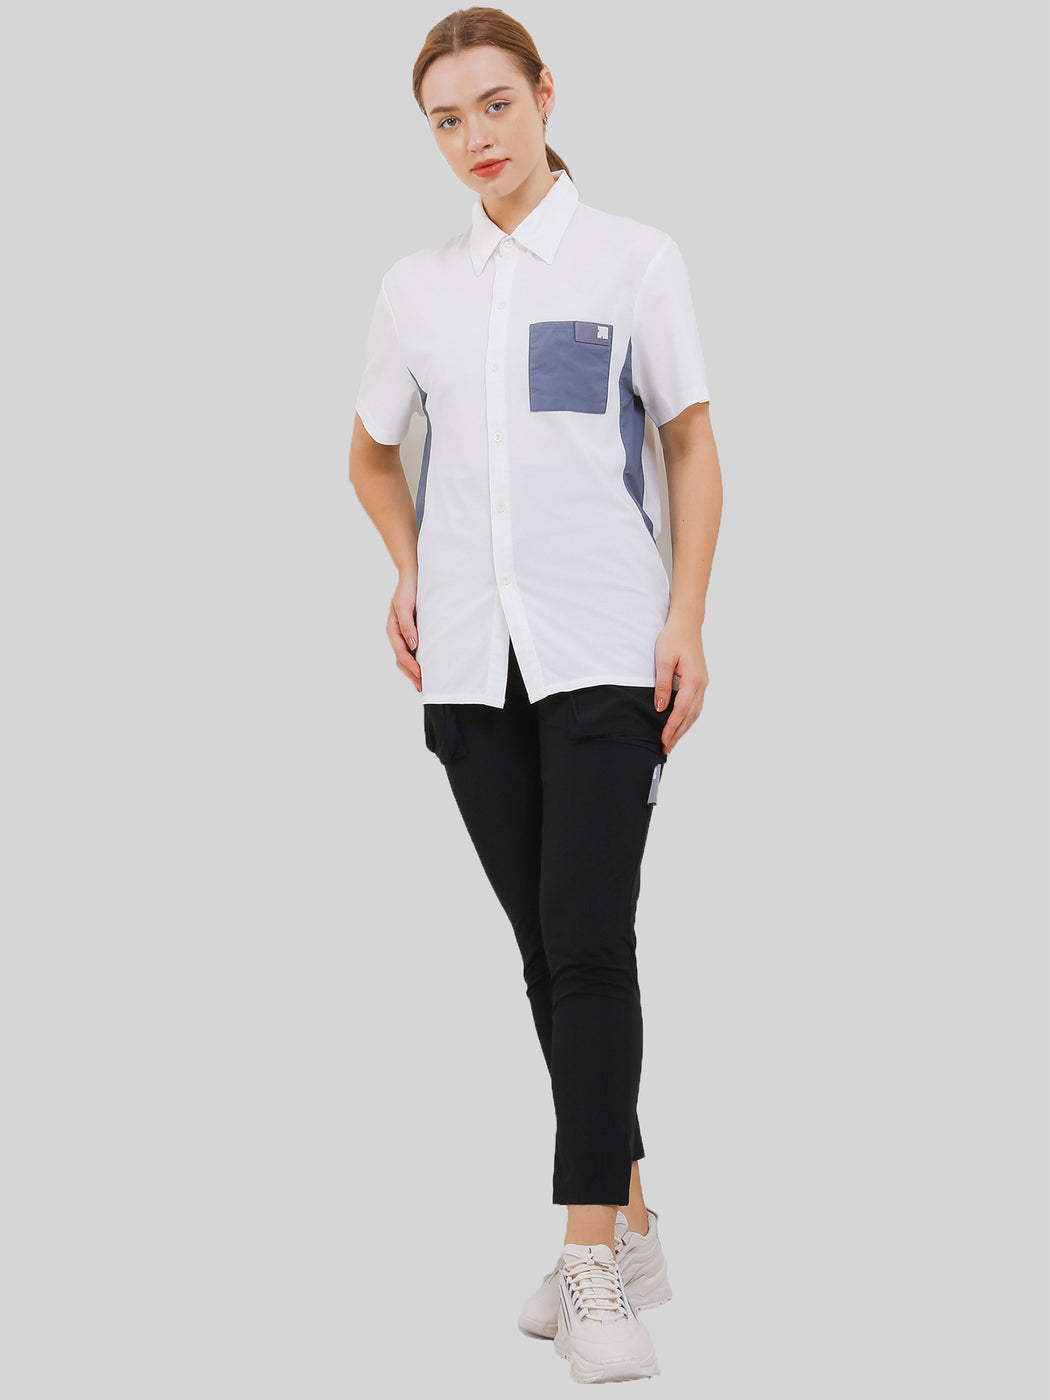 Unisex Ultimate Utilitarian Shirt Female White